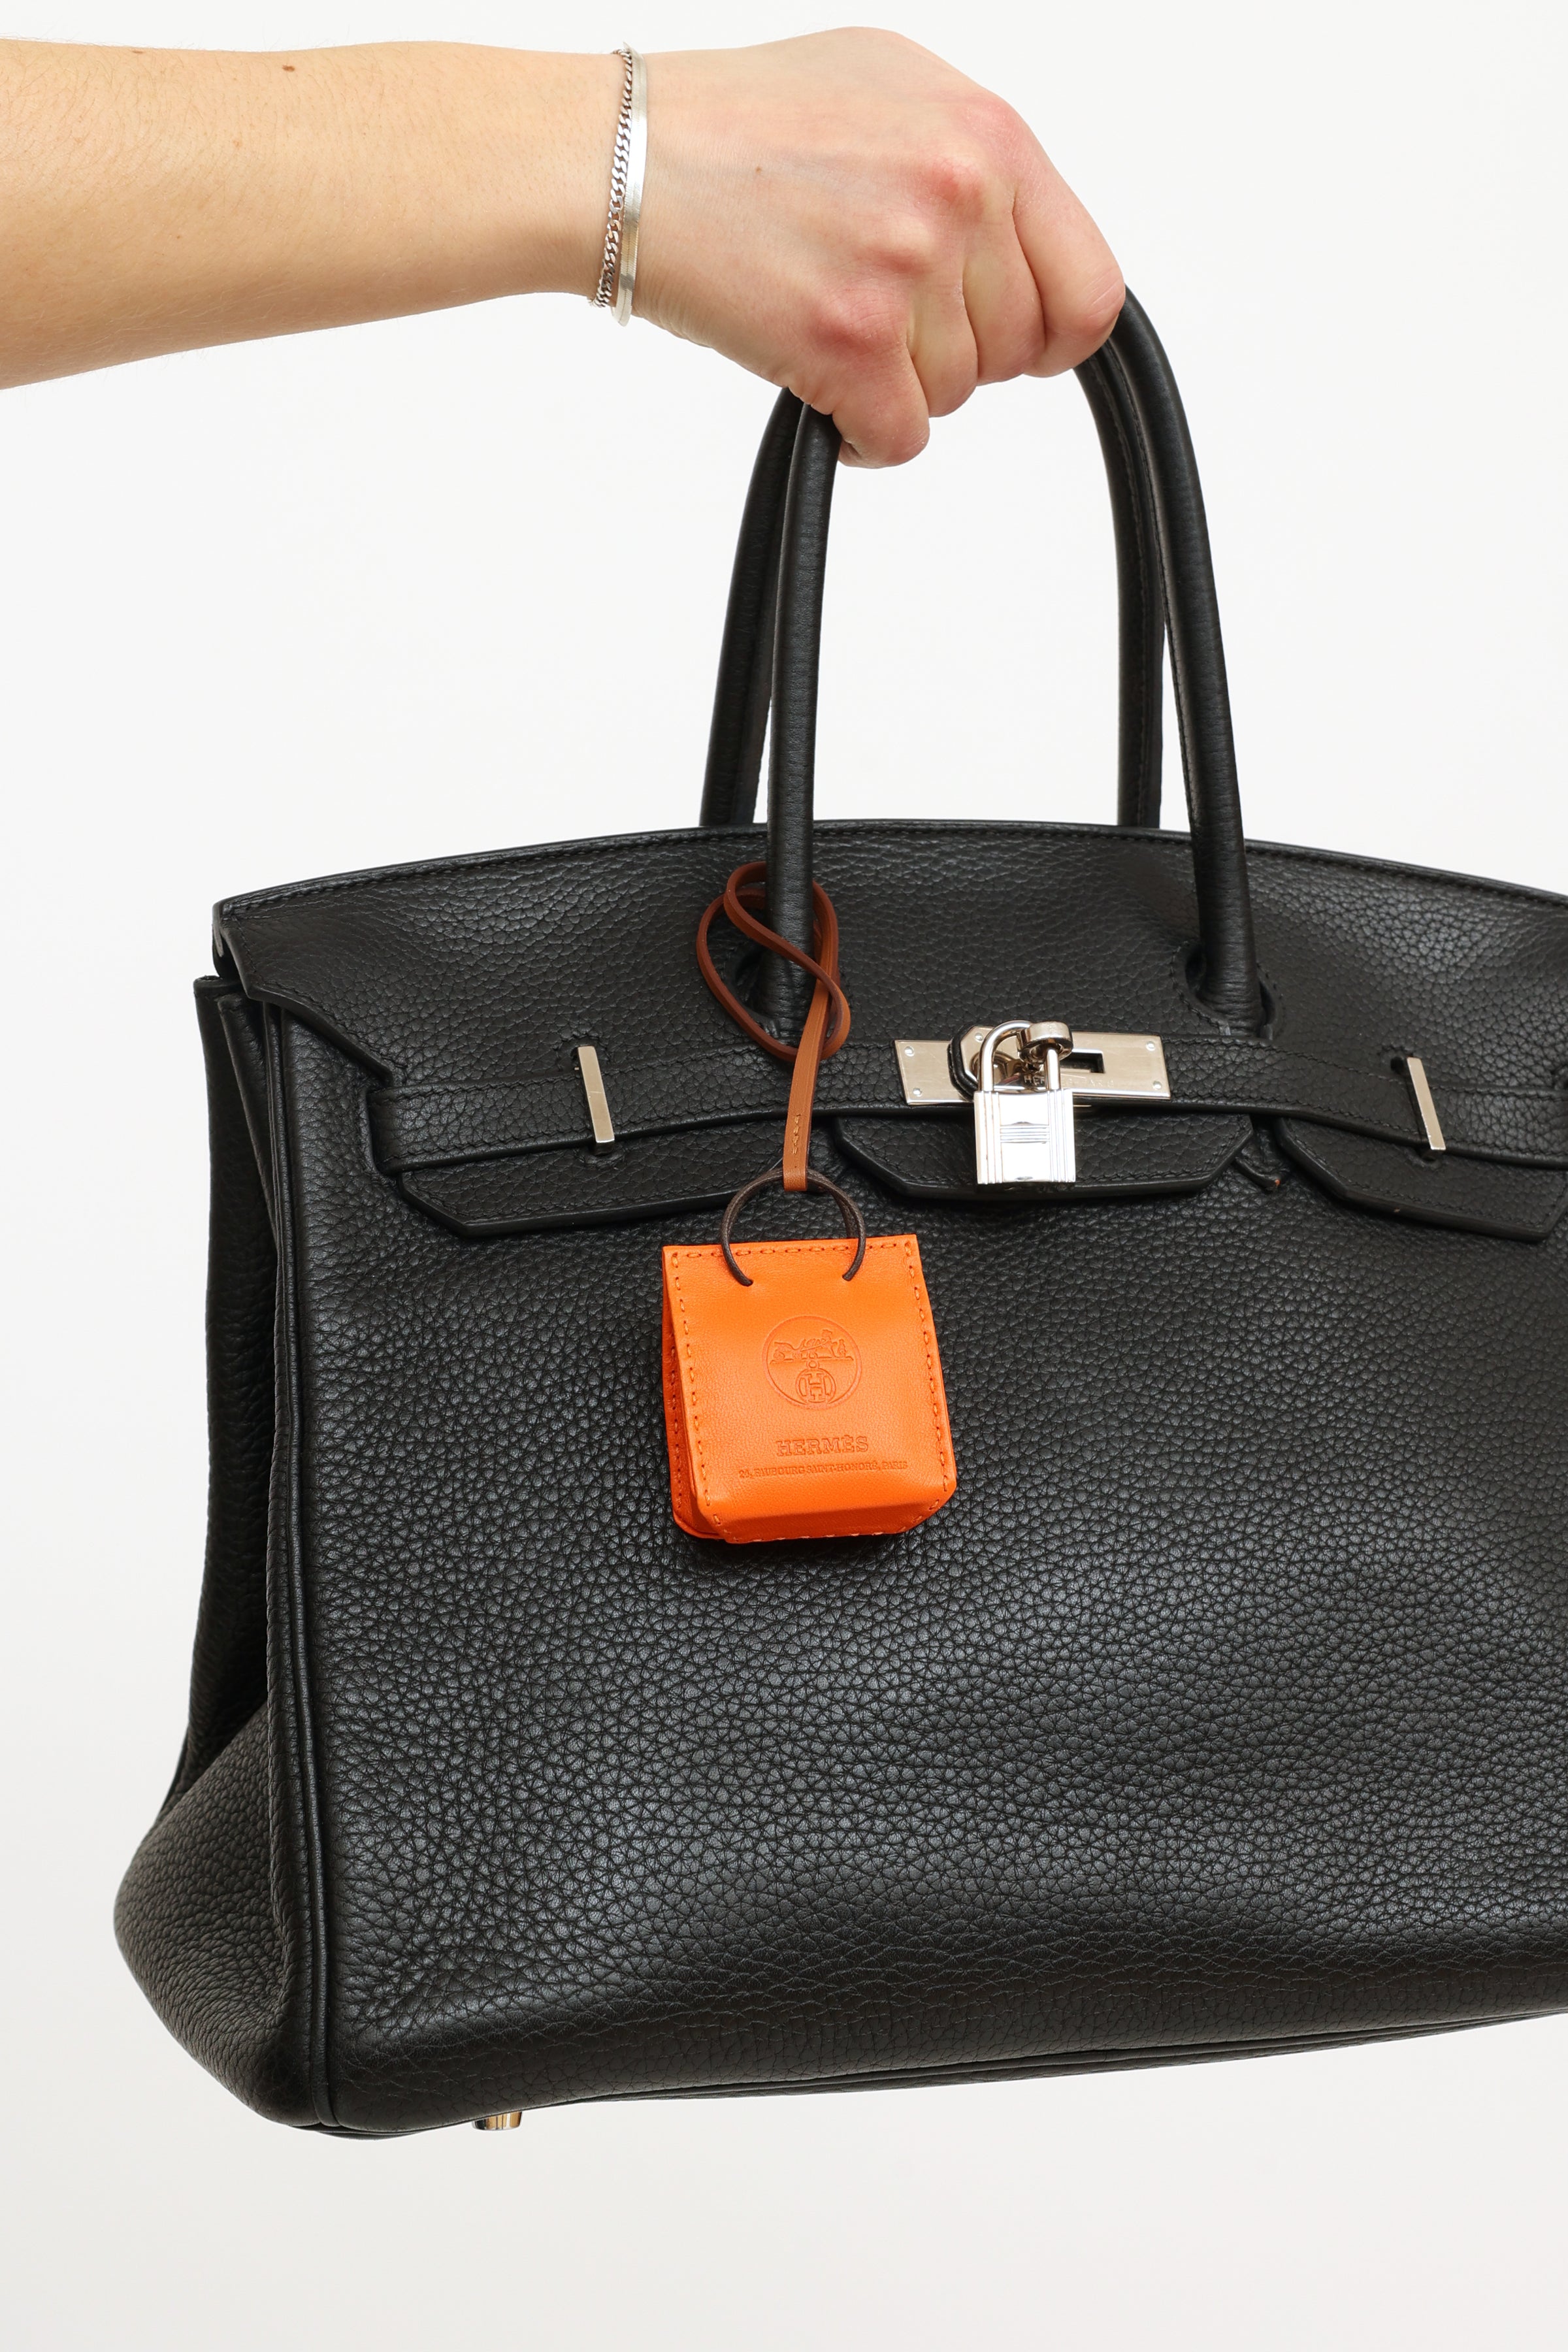 Hermes Womens Keychains & Bag Charms, Black